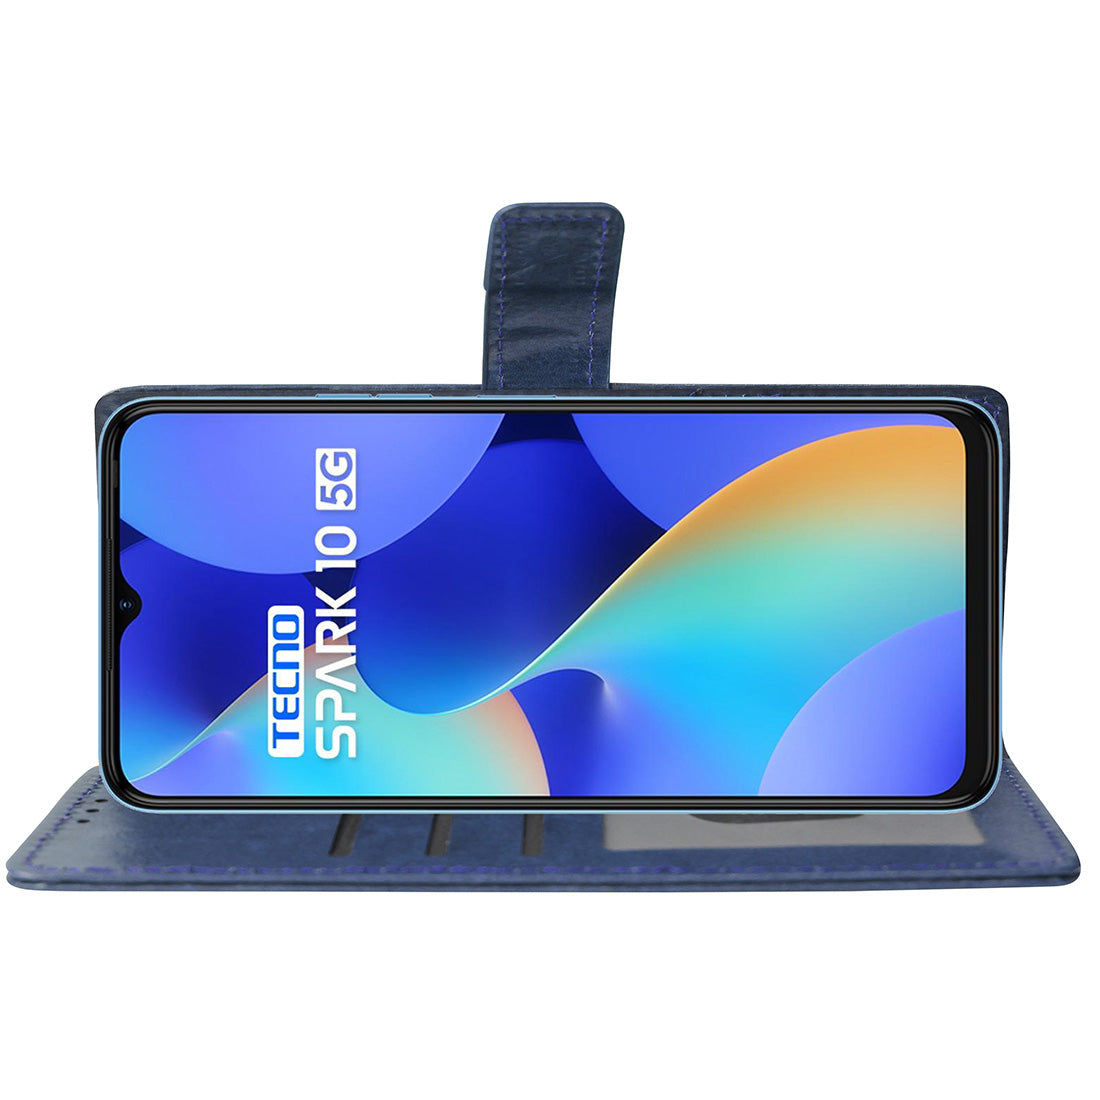 Premium Wallet Flip Cover for Tecno Spark 10 5G